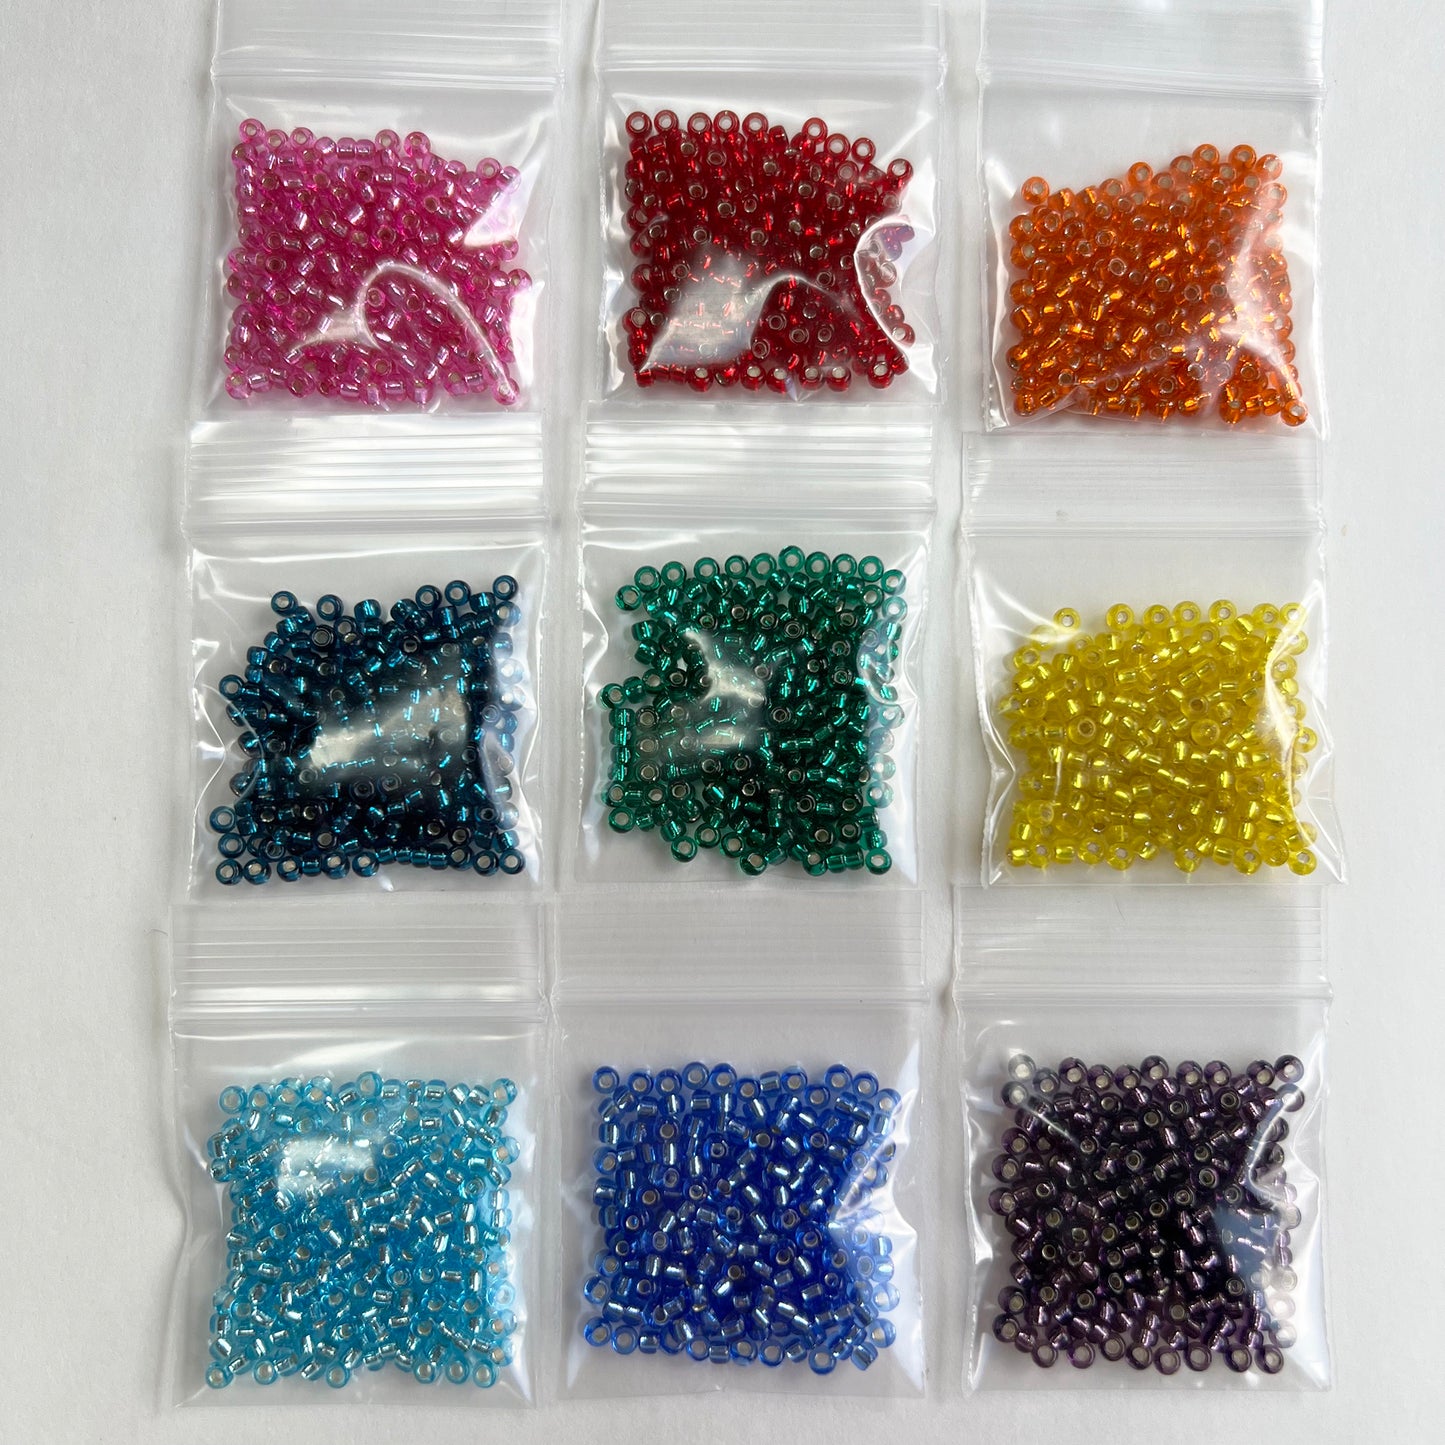 Rainbow Pack of Miyuki Silver Lined 8/0 Beads